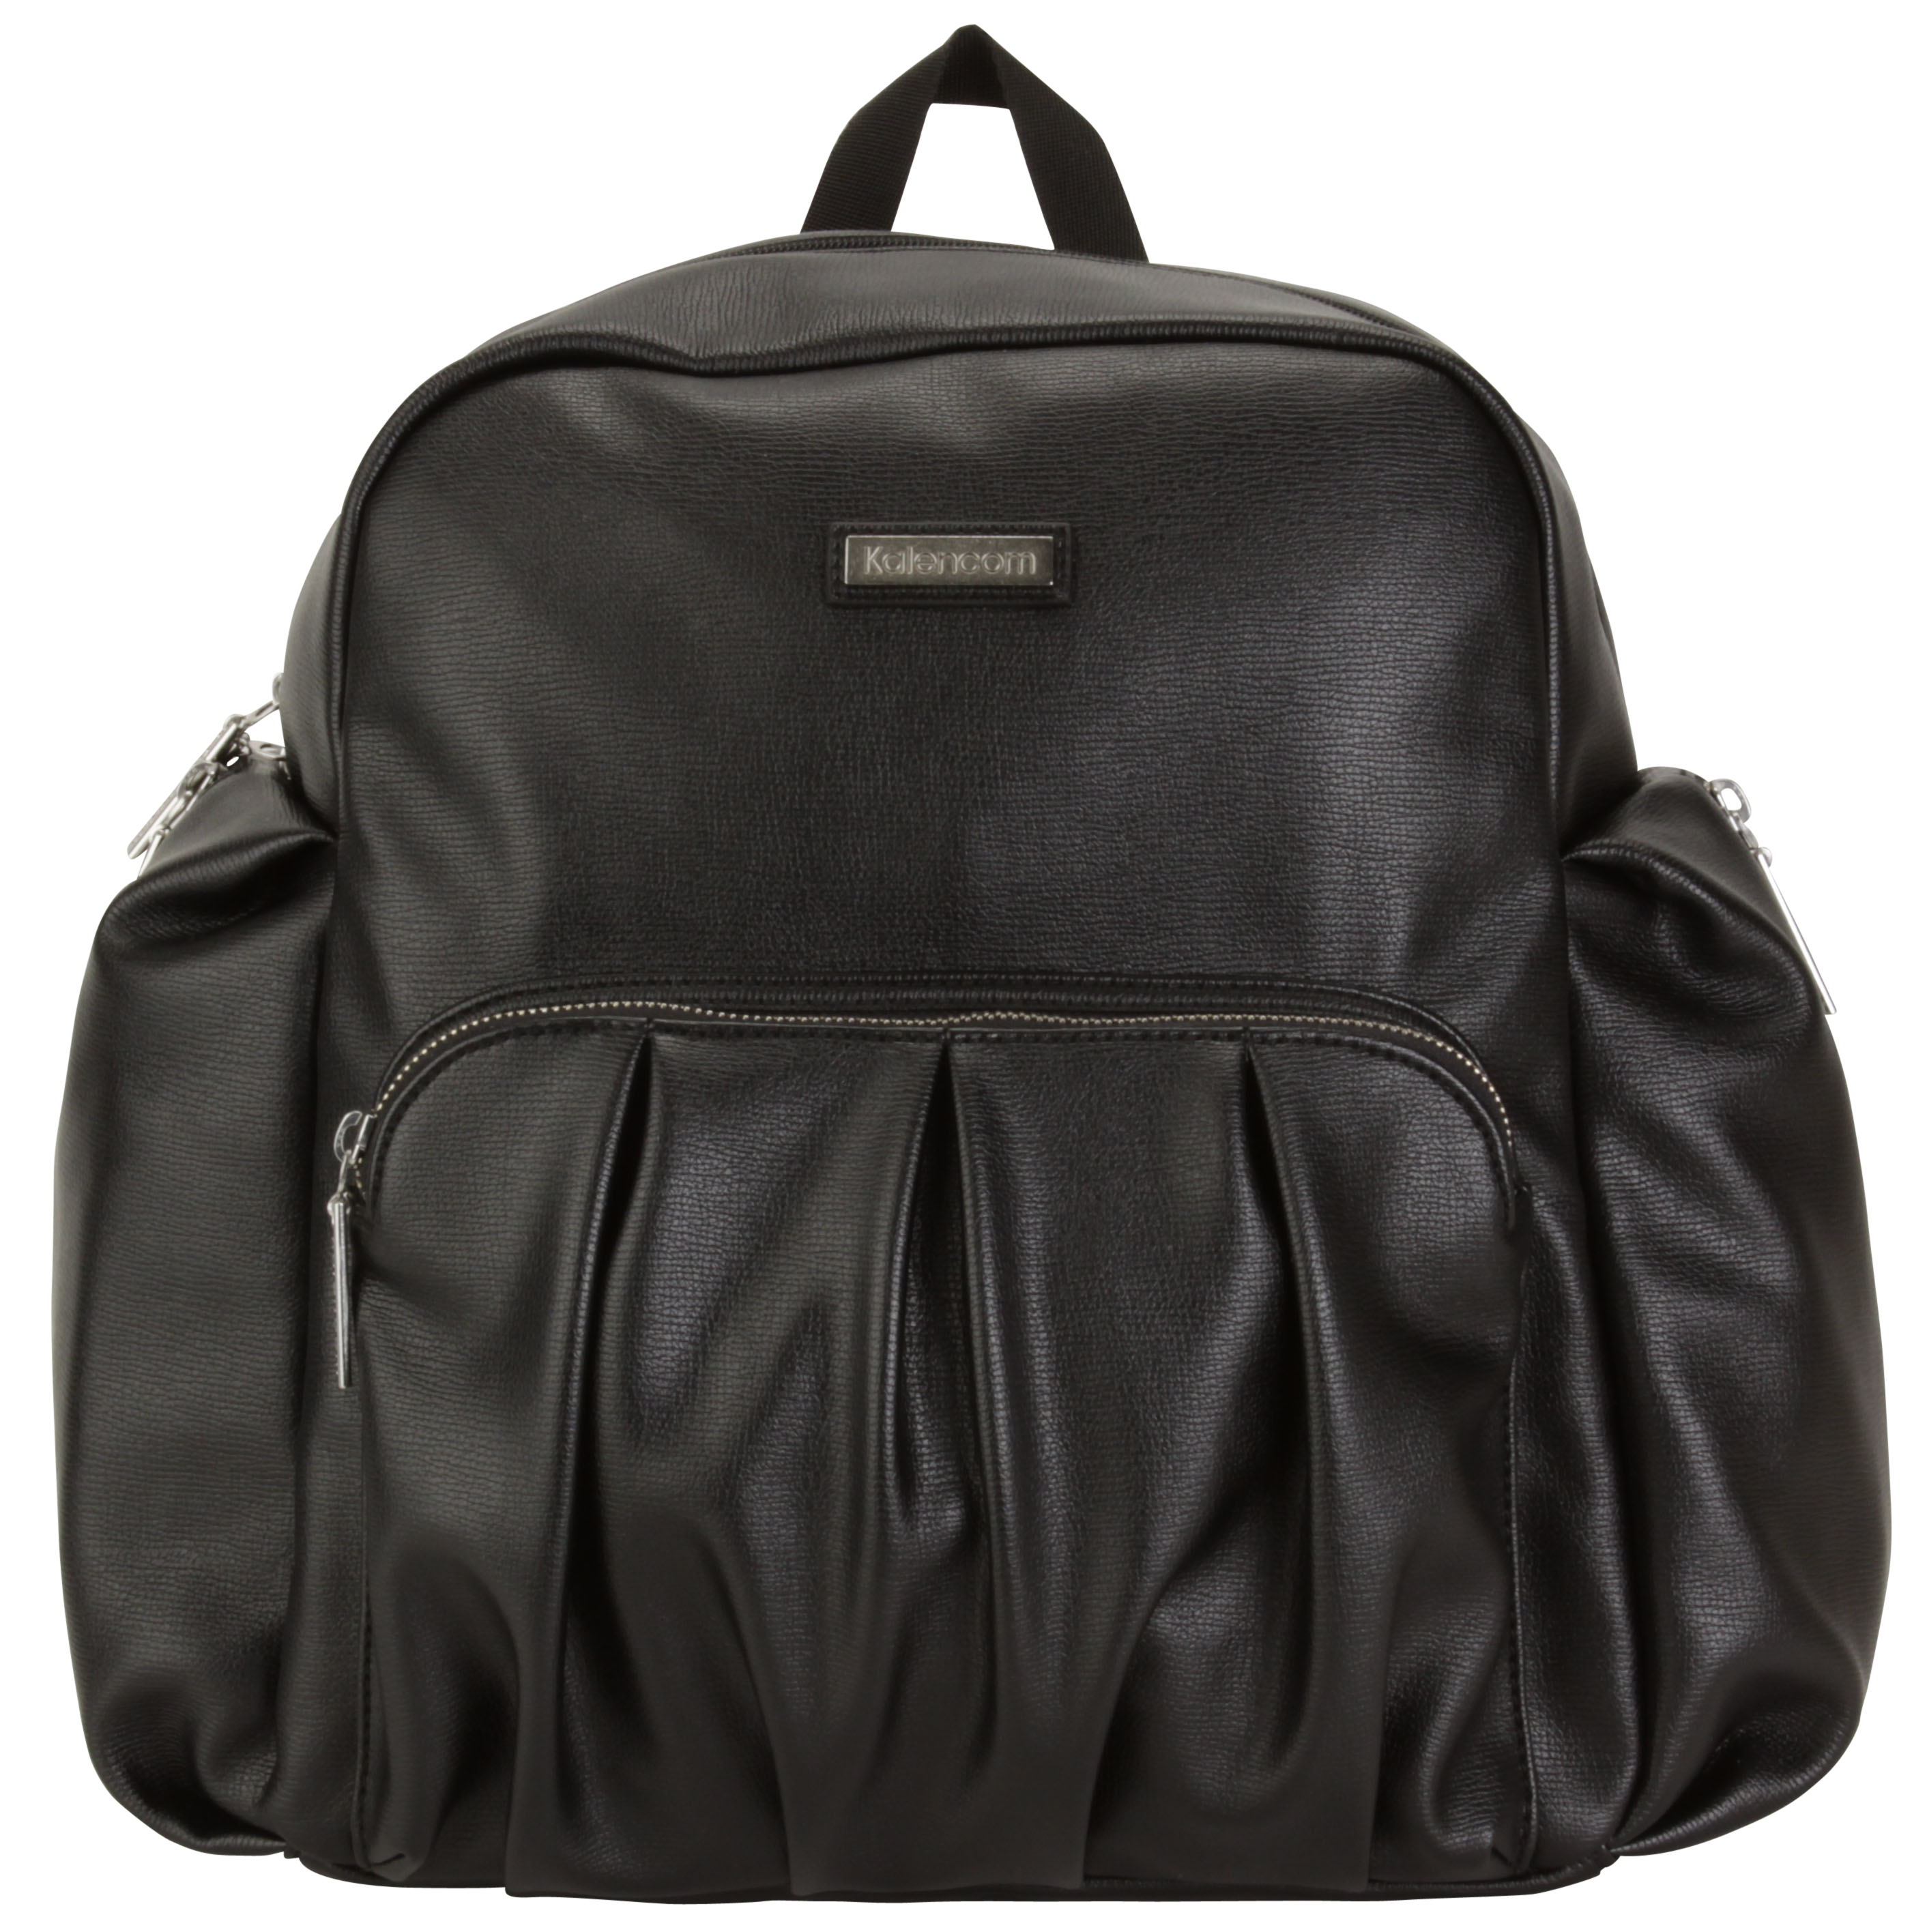 Kalencom Chicago Backpack / Urban Sling Diaper Bag in Black Vegan - image 1 of 4